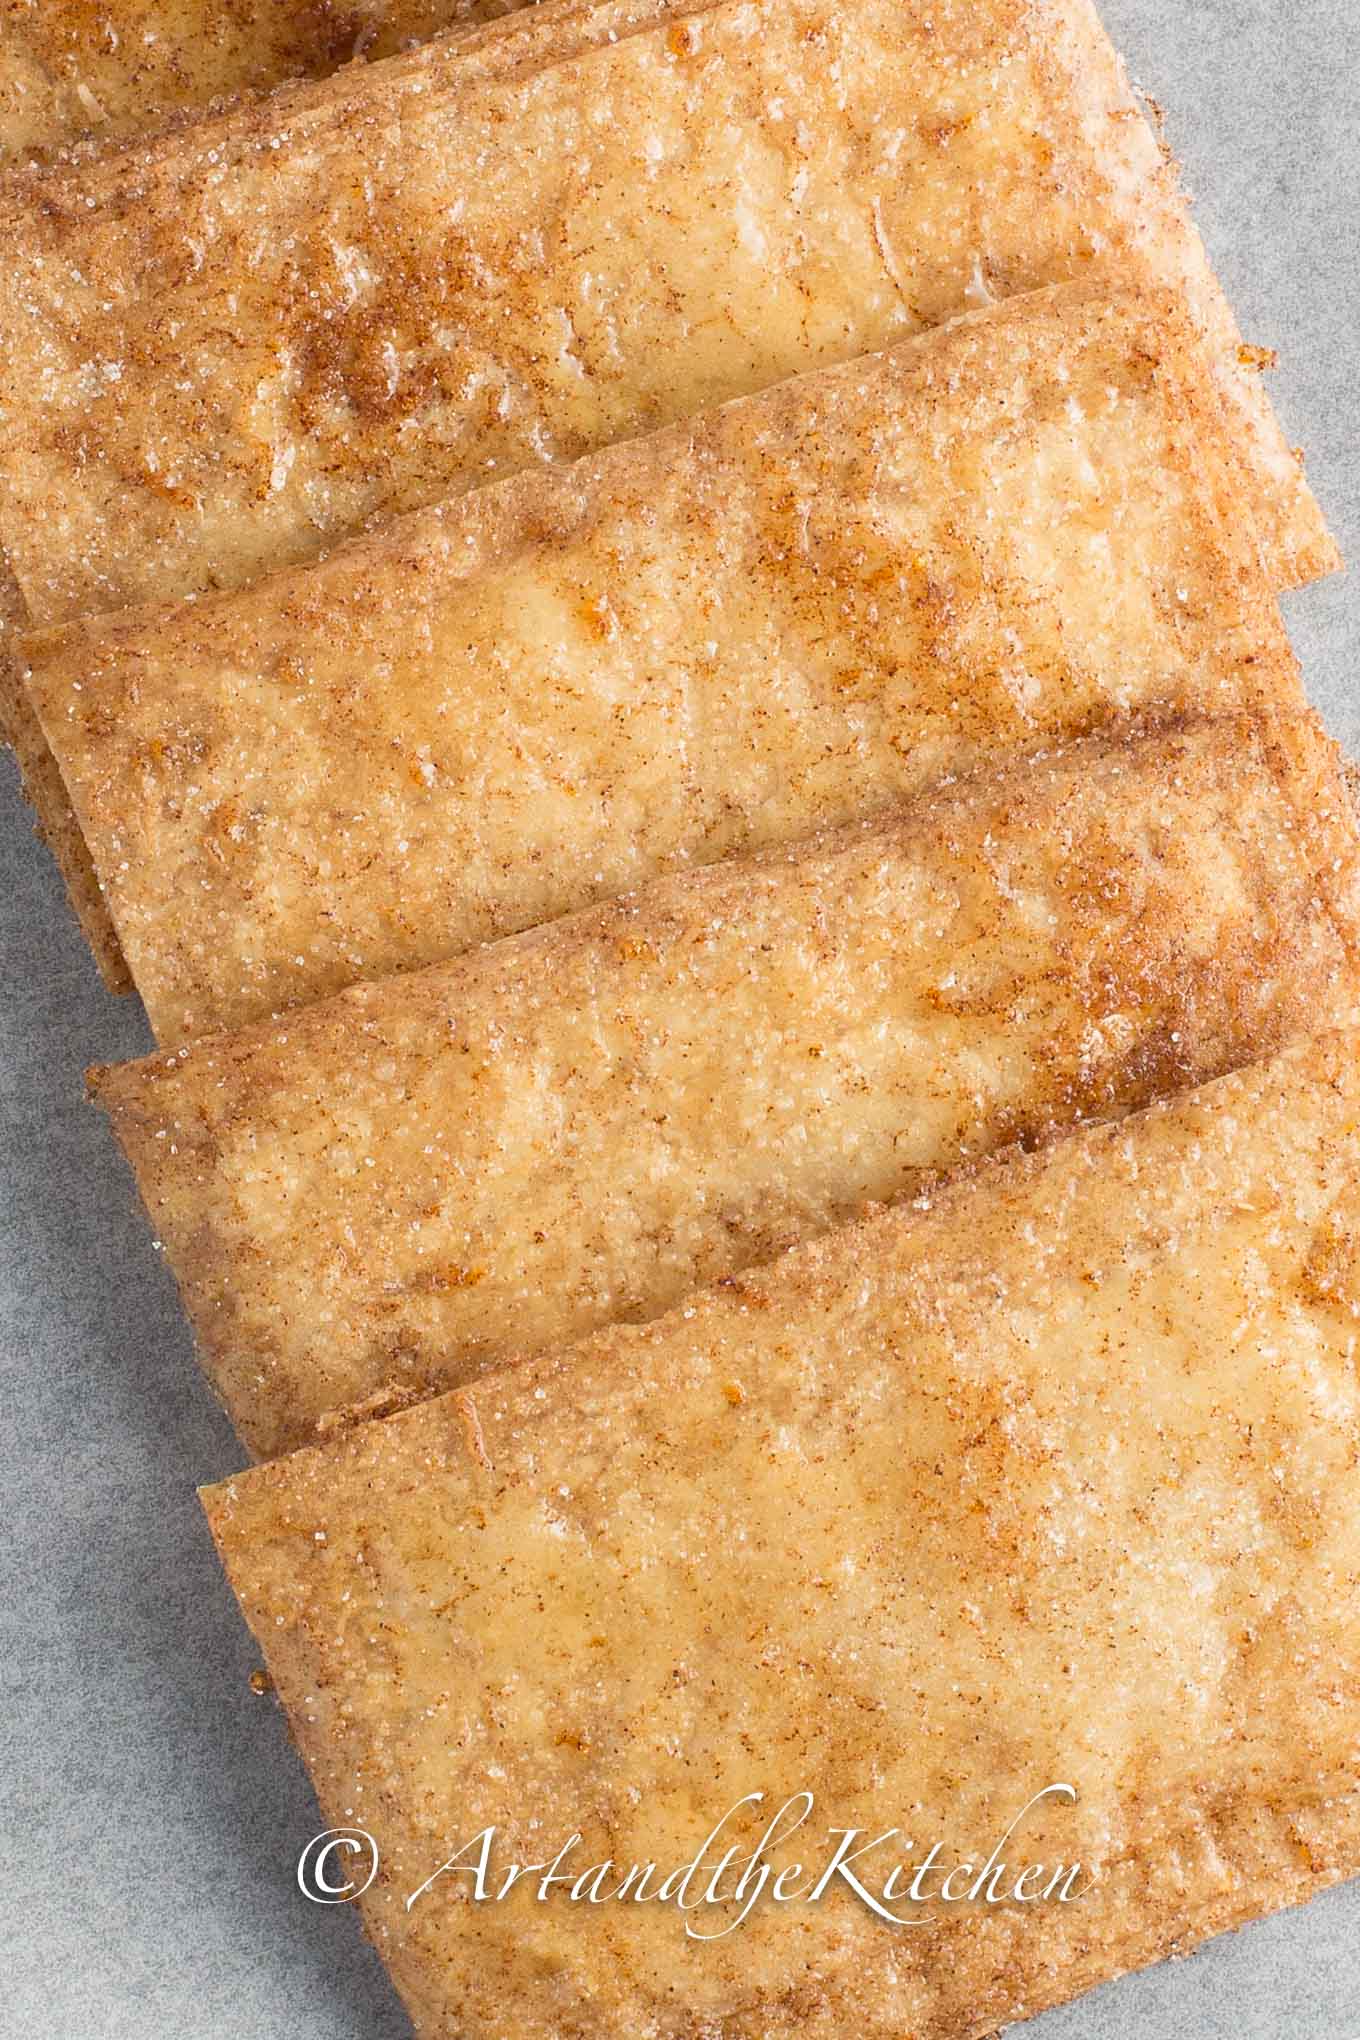 Honey Baked Crispy Phyllo Squares